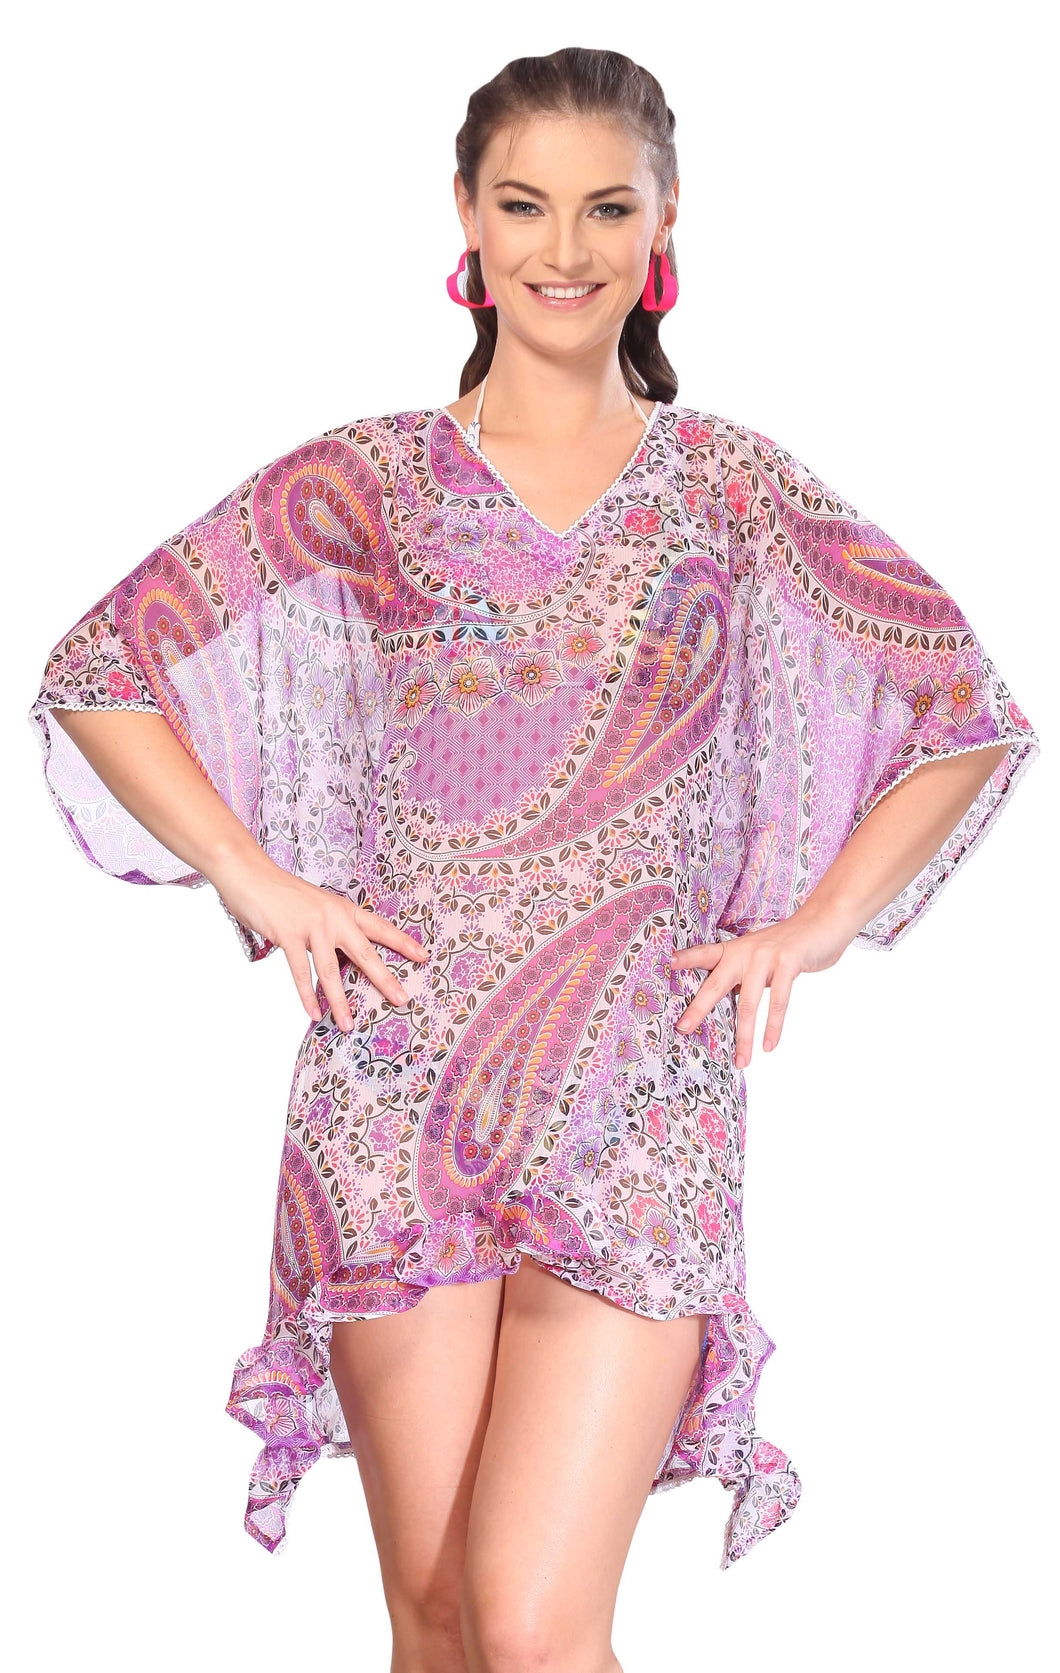 LA LEELA Soft Sleepdress Short Sleeve Women Comfy Sleeping Nightshirts Pajama Dress US 8-14 Purple_G2